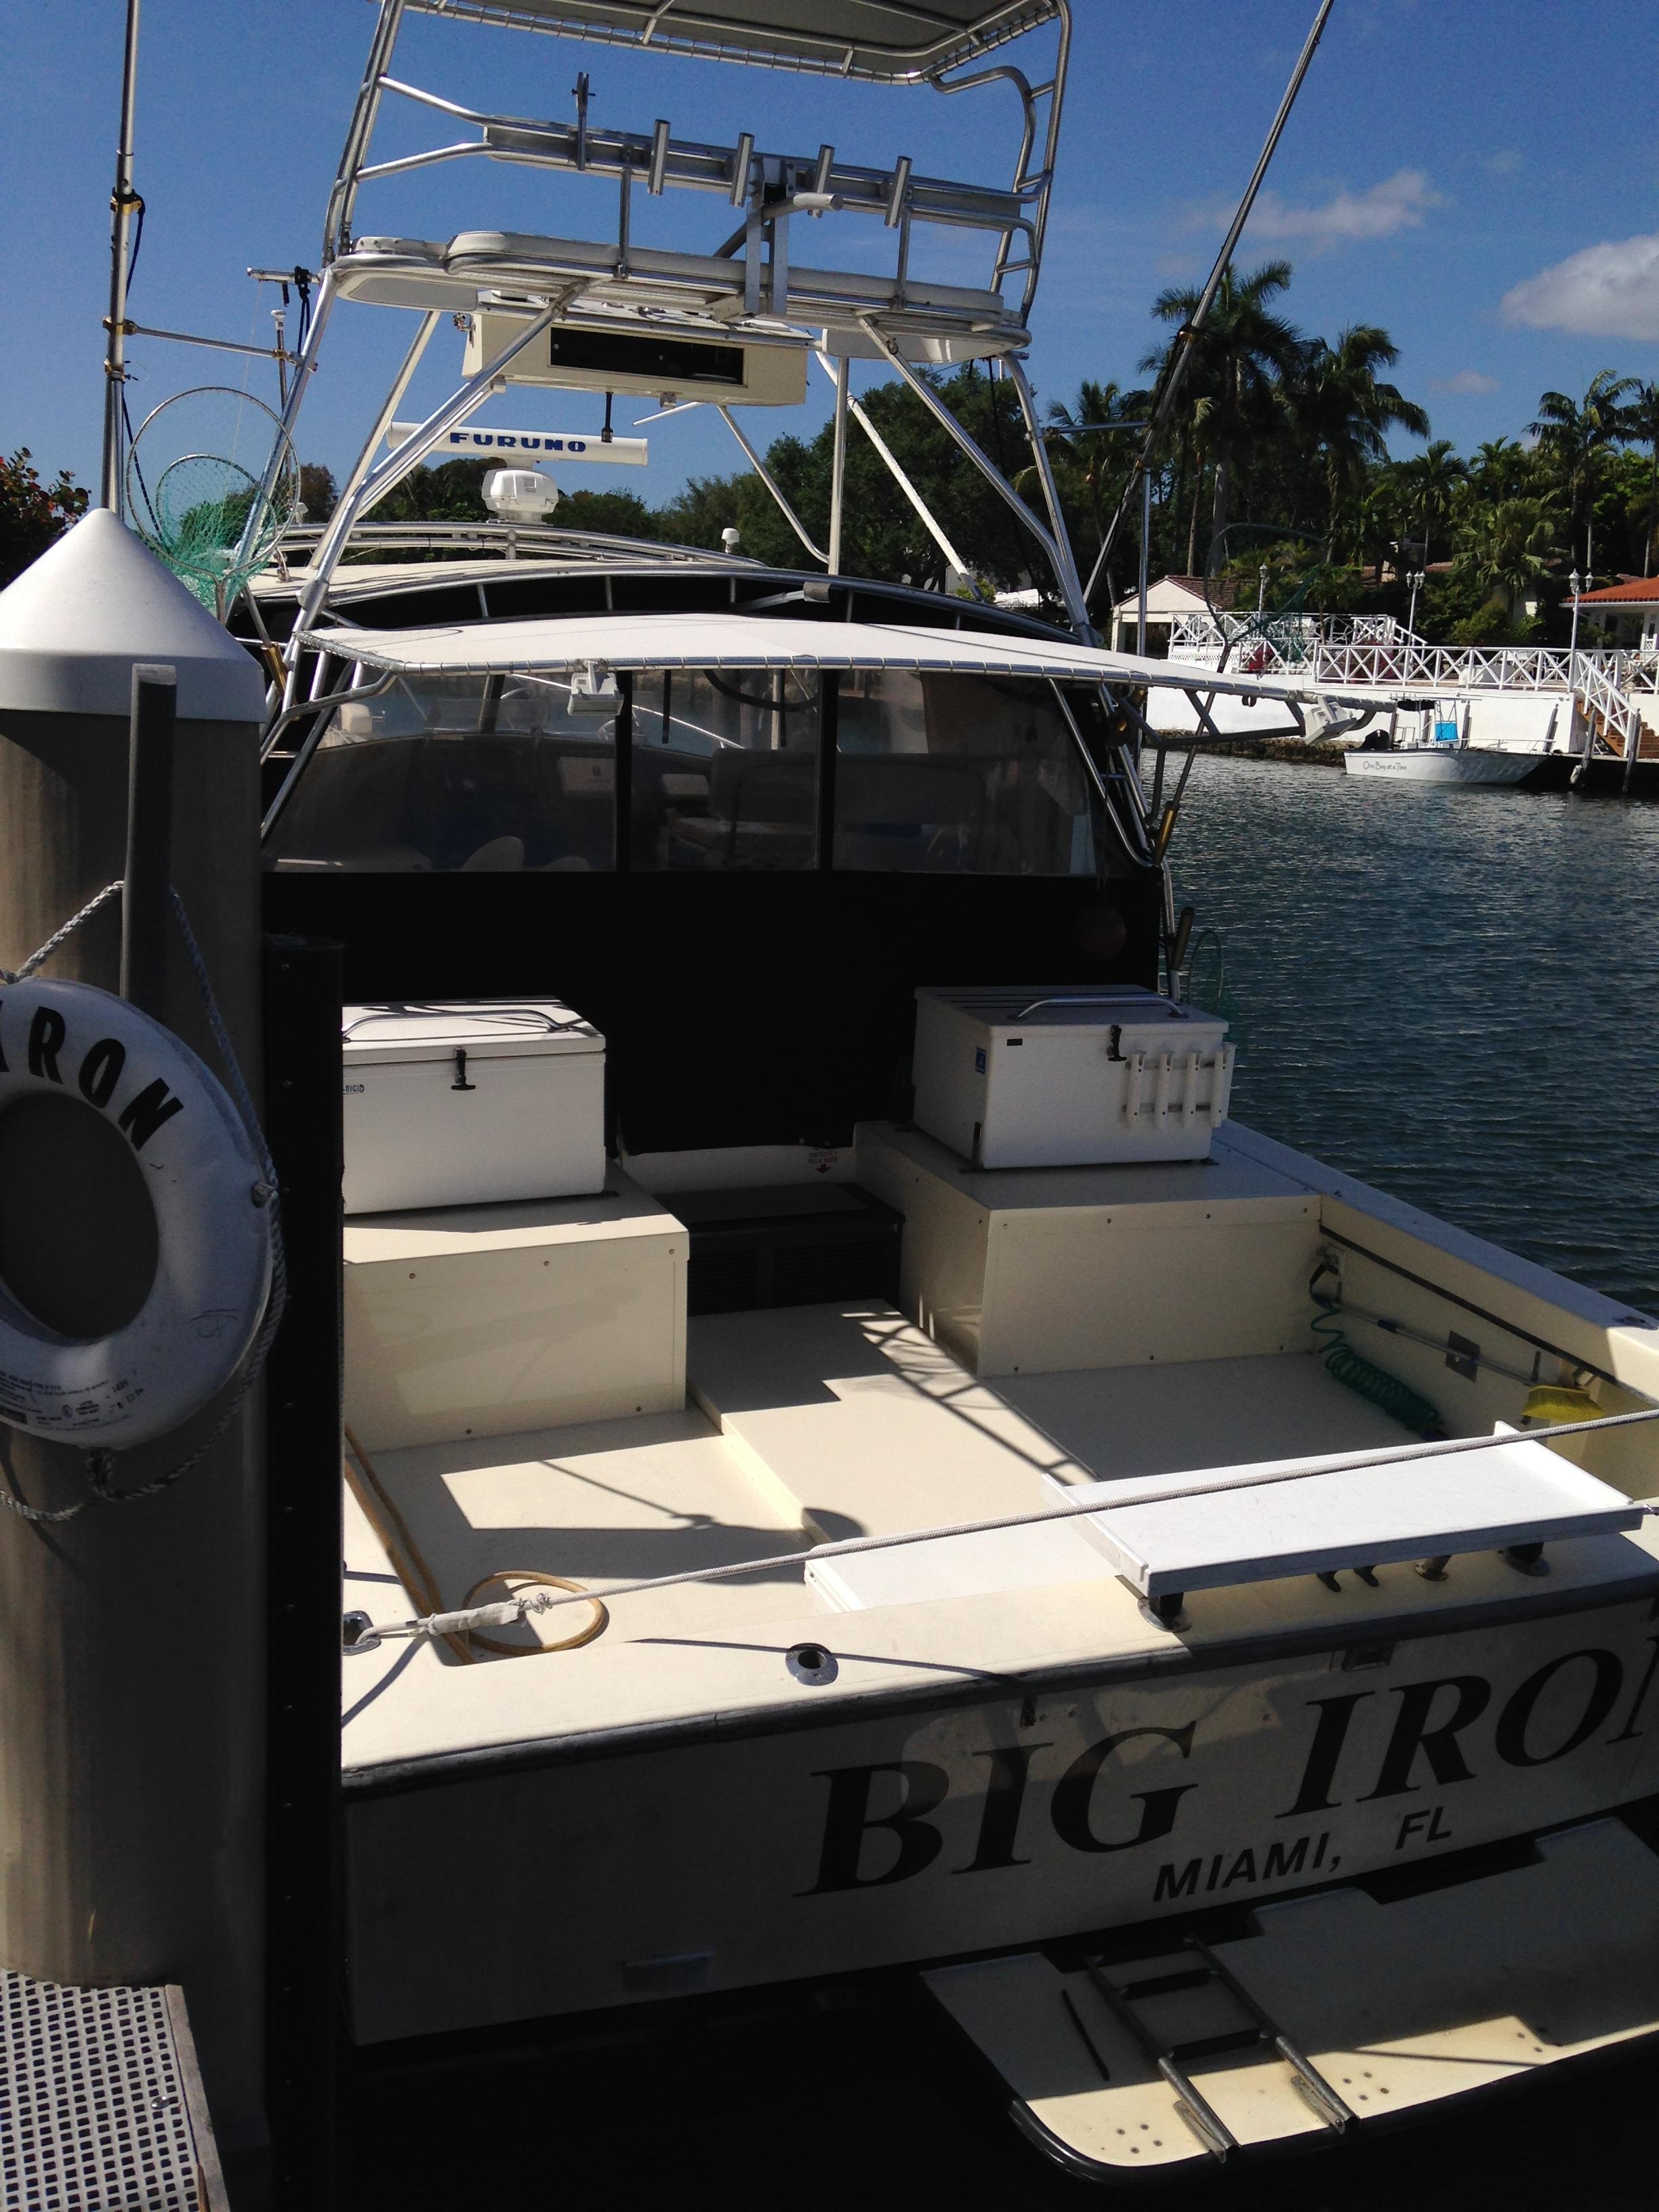 Key West #1 Express Sportfisherman, Miami/ Coral Gables